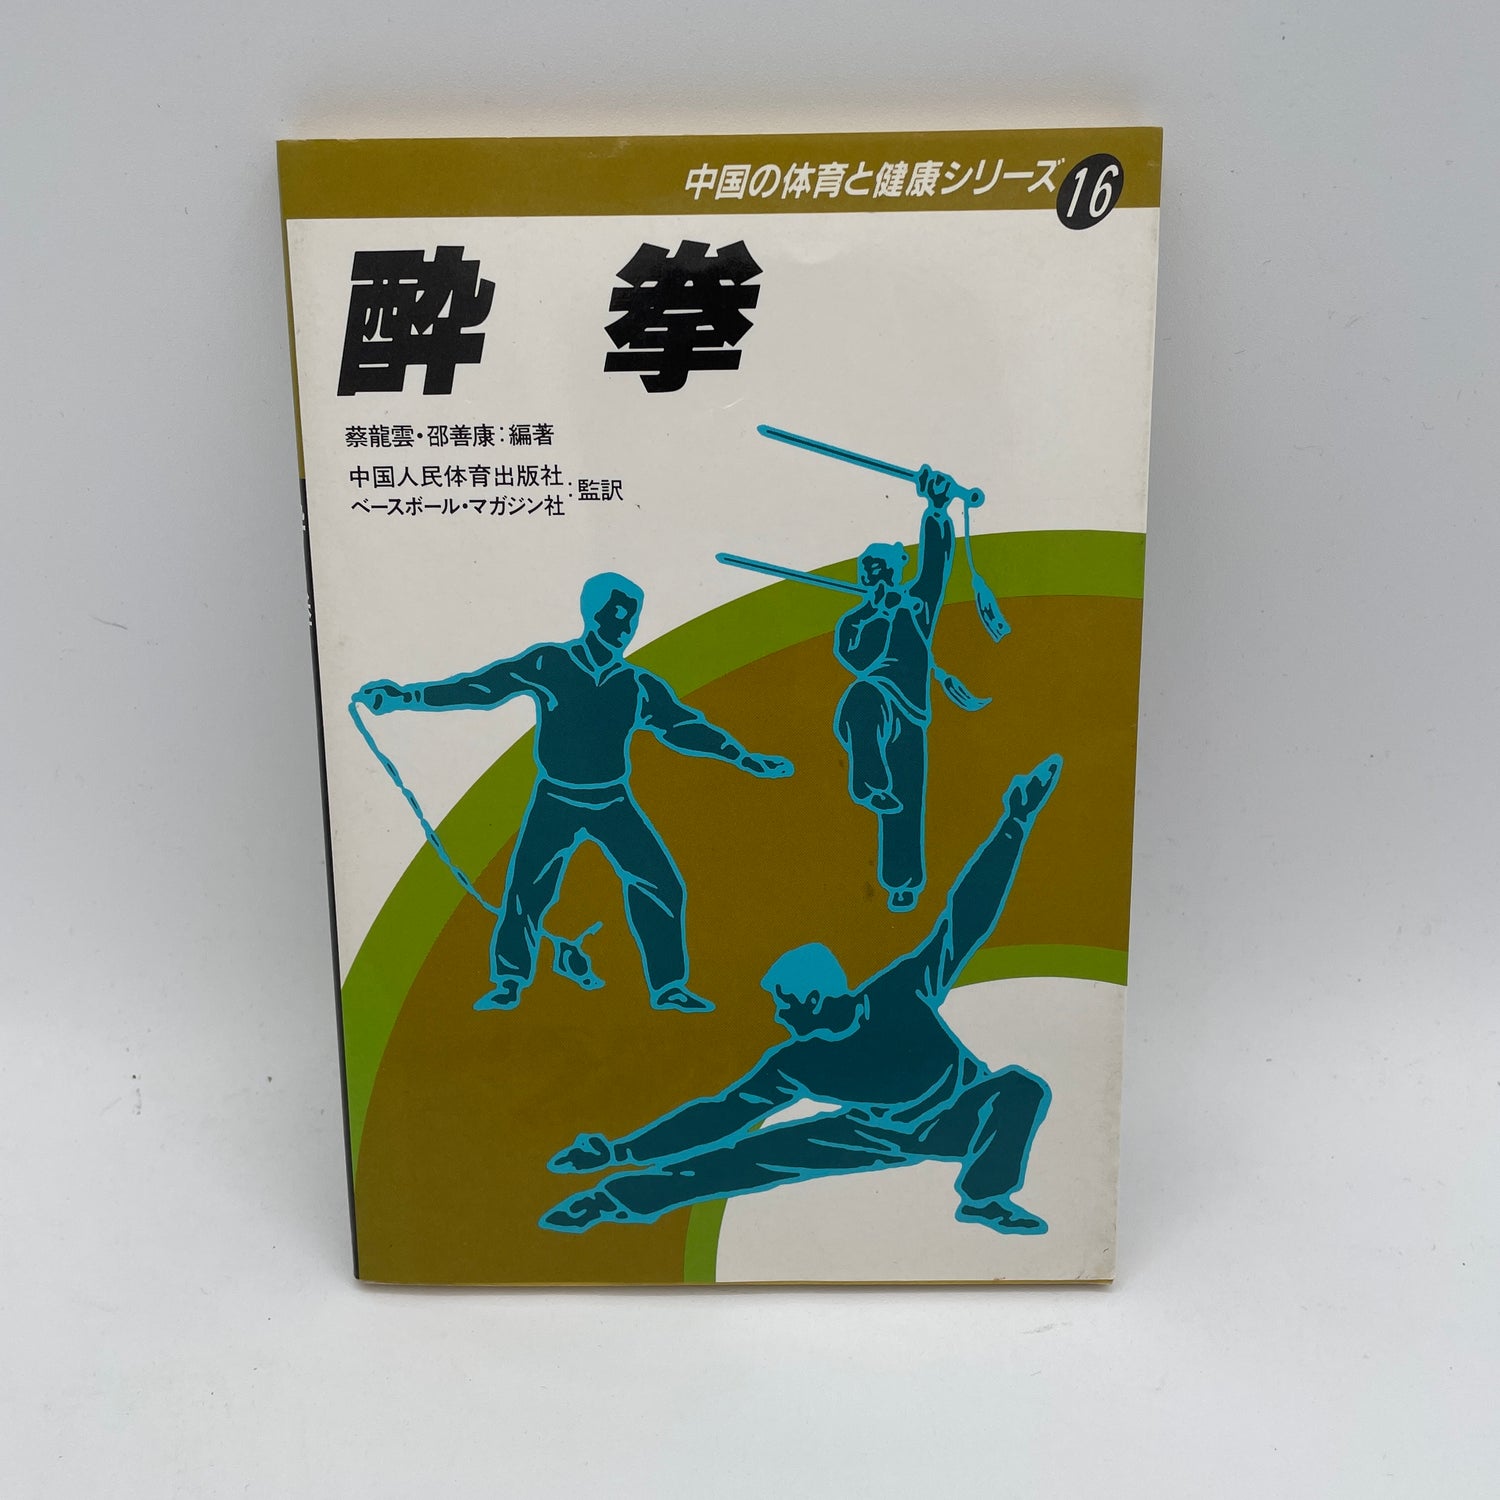 Yoi Ken (Drunken Kung Fu): 中国体育 & 健康シリーズ #16 書籍 (中古品)